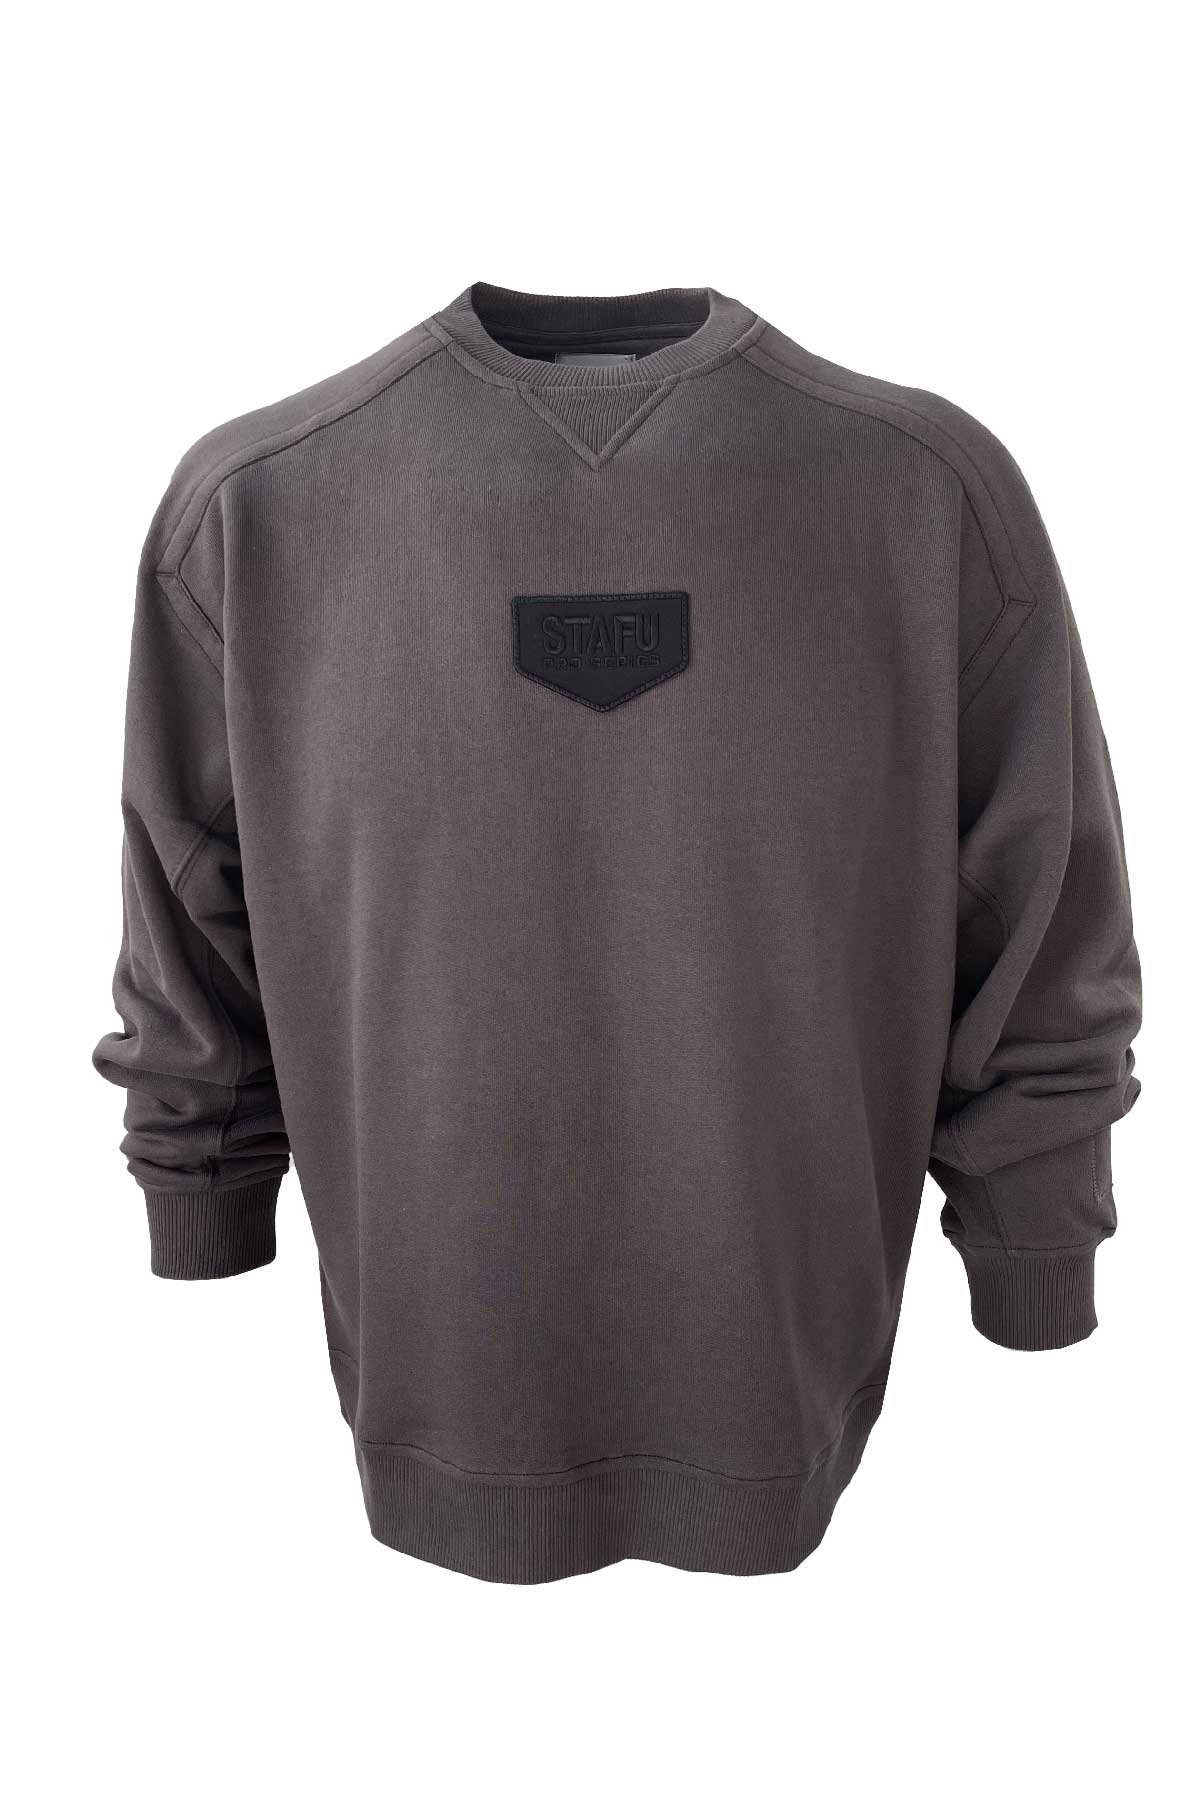 Retro Unisex Crew Neck Long Sleeve Grey Sweatshirt